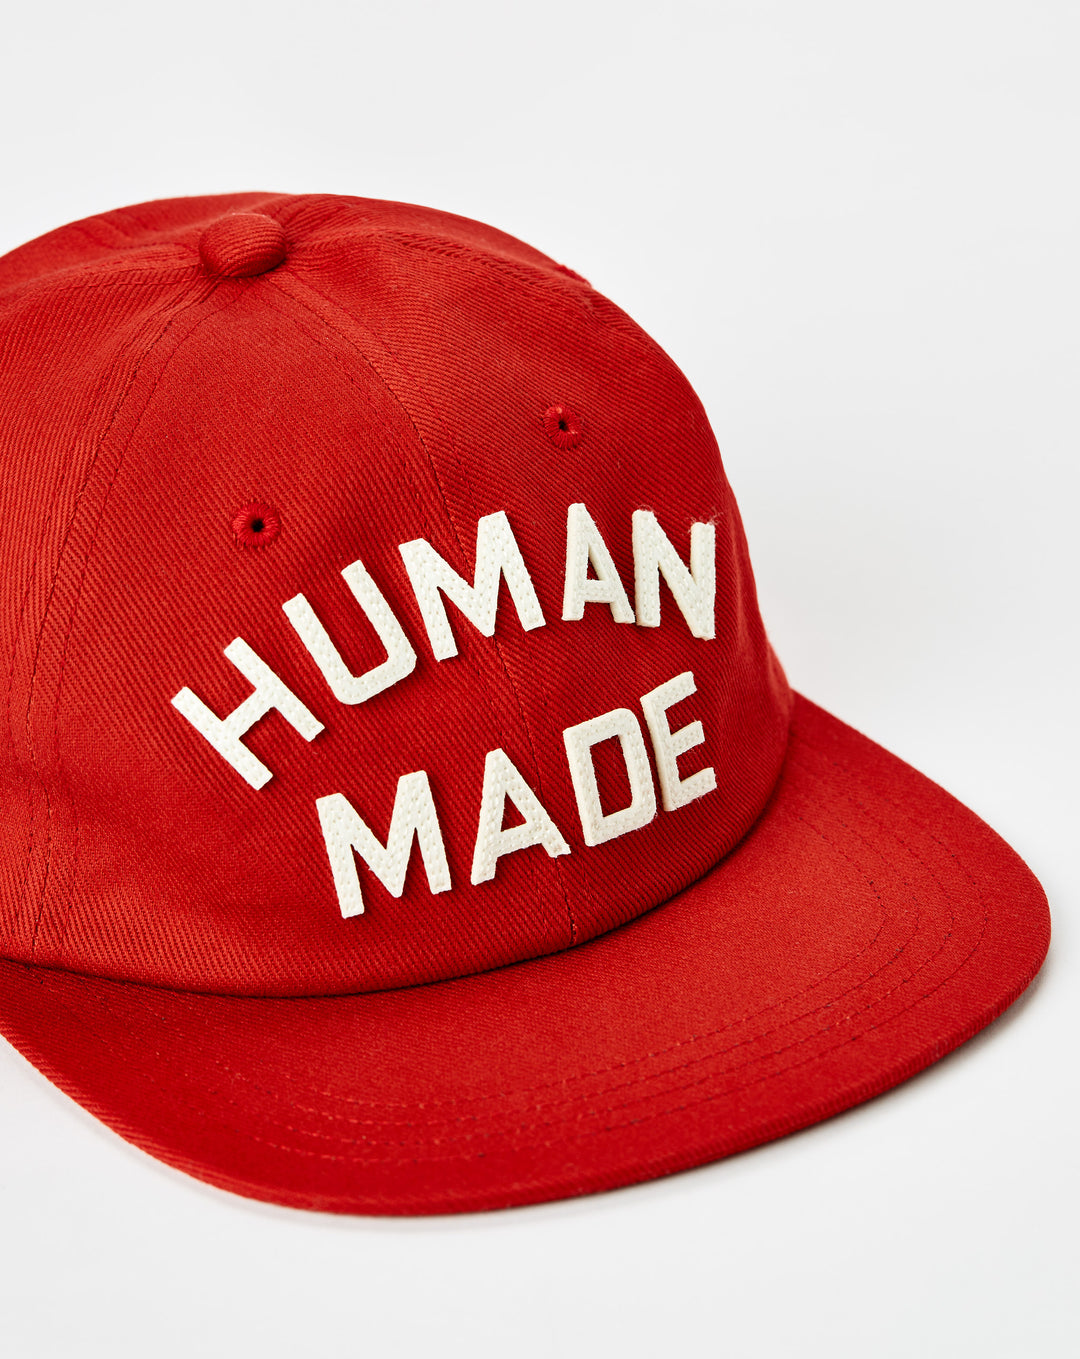 Human Made Baseball Cap  - XHIBITION